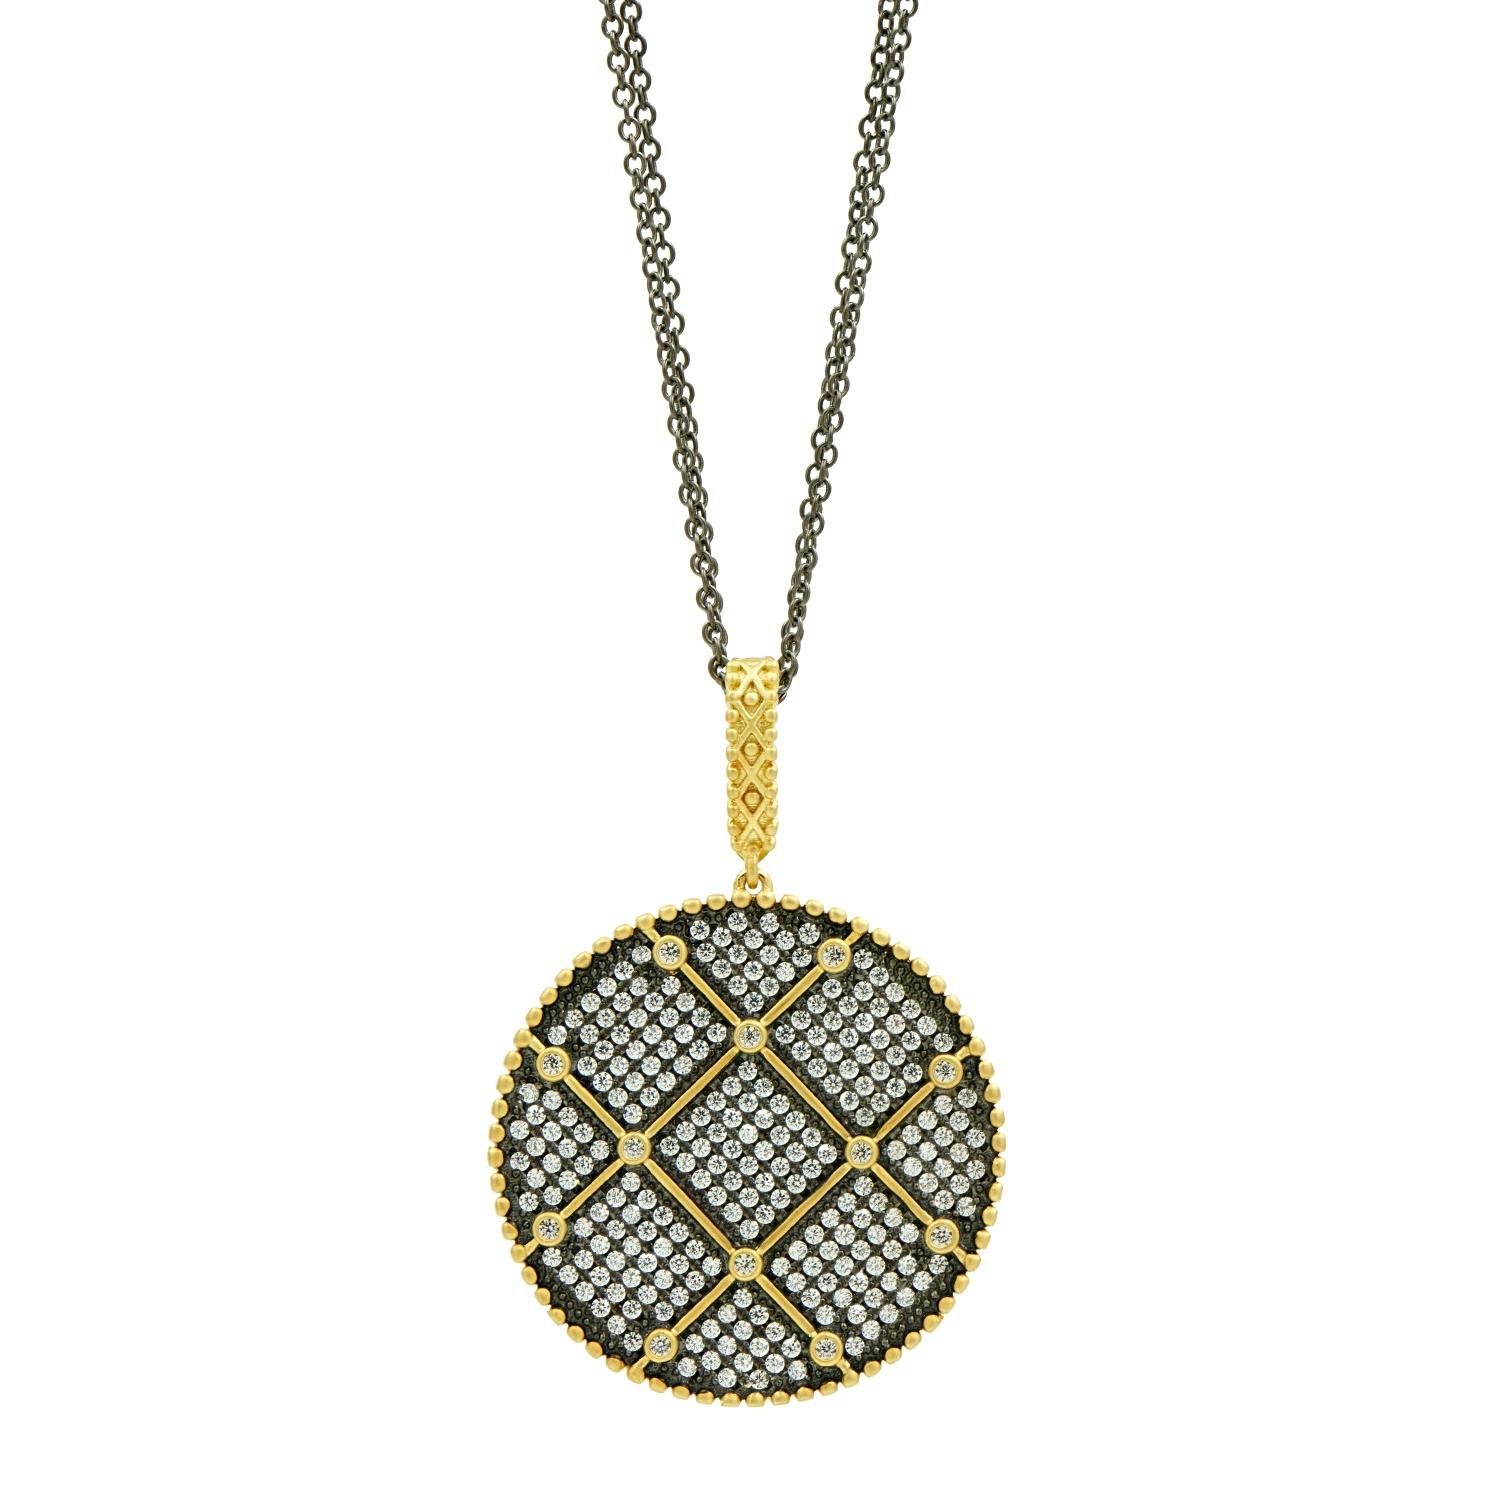 Freida Rothman Black and Gold Grid Large Disc Pendant Necklace